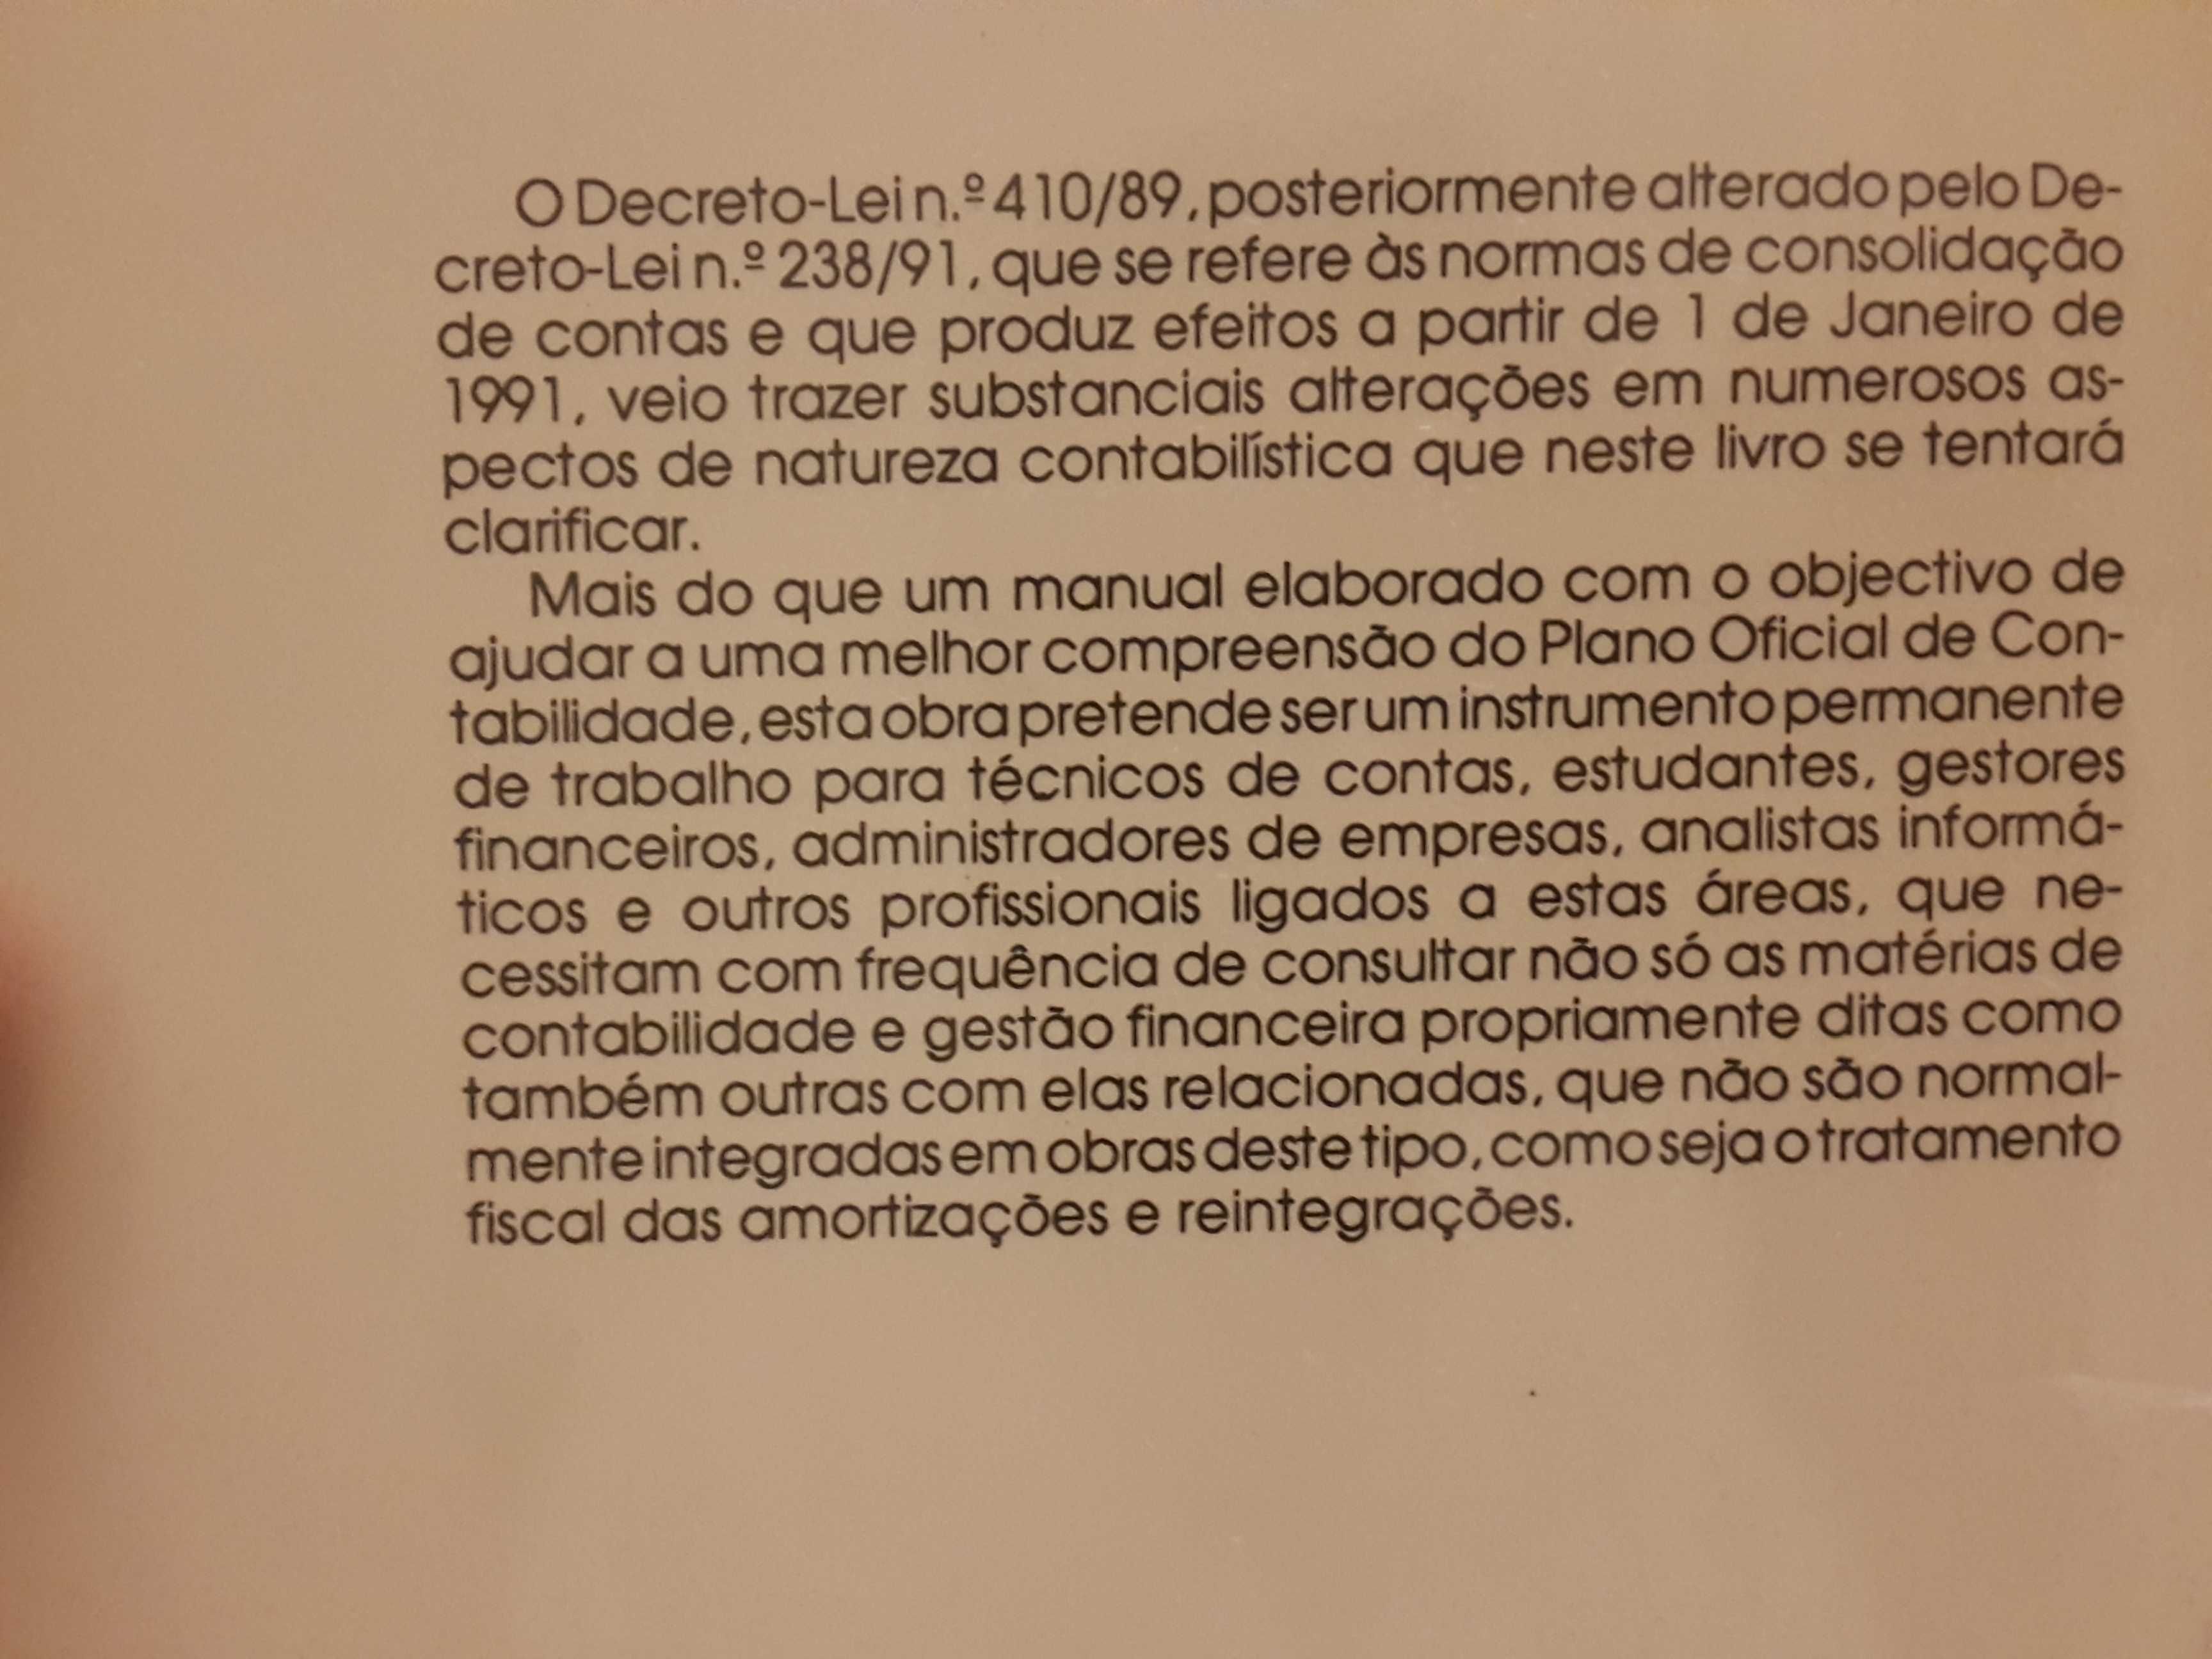 Norberto Fernandes - Plano Oficial de Contabilidade